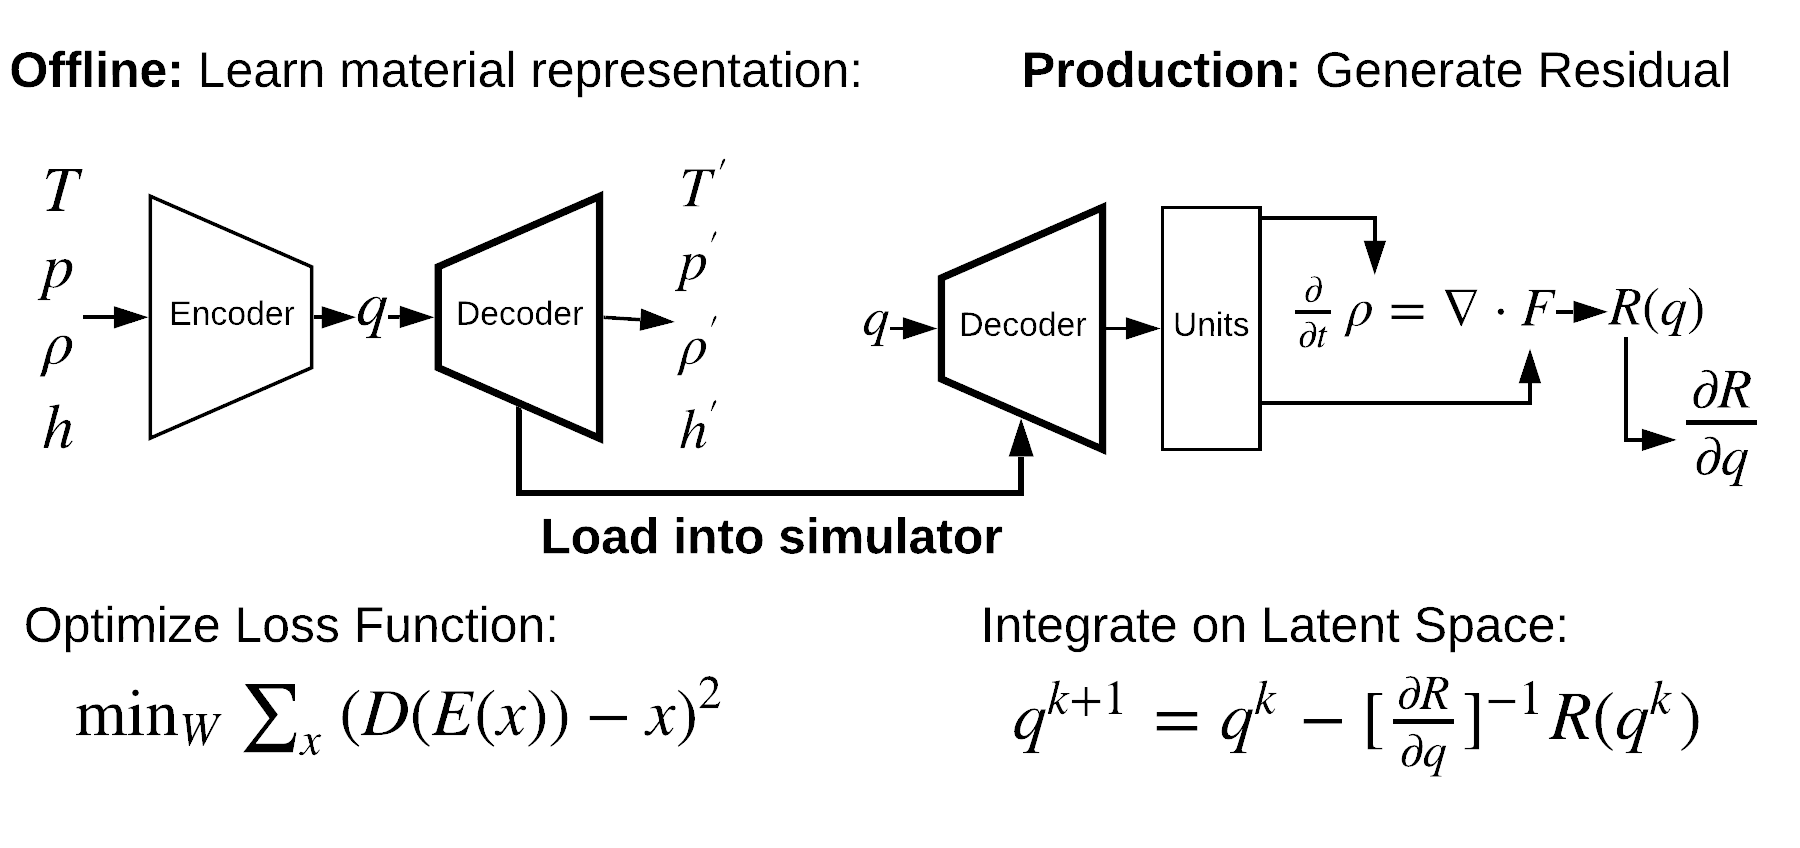 integrating on autoencoders